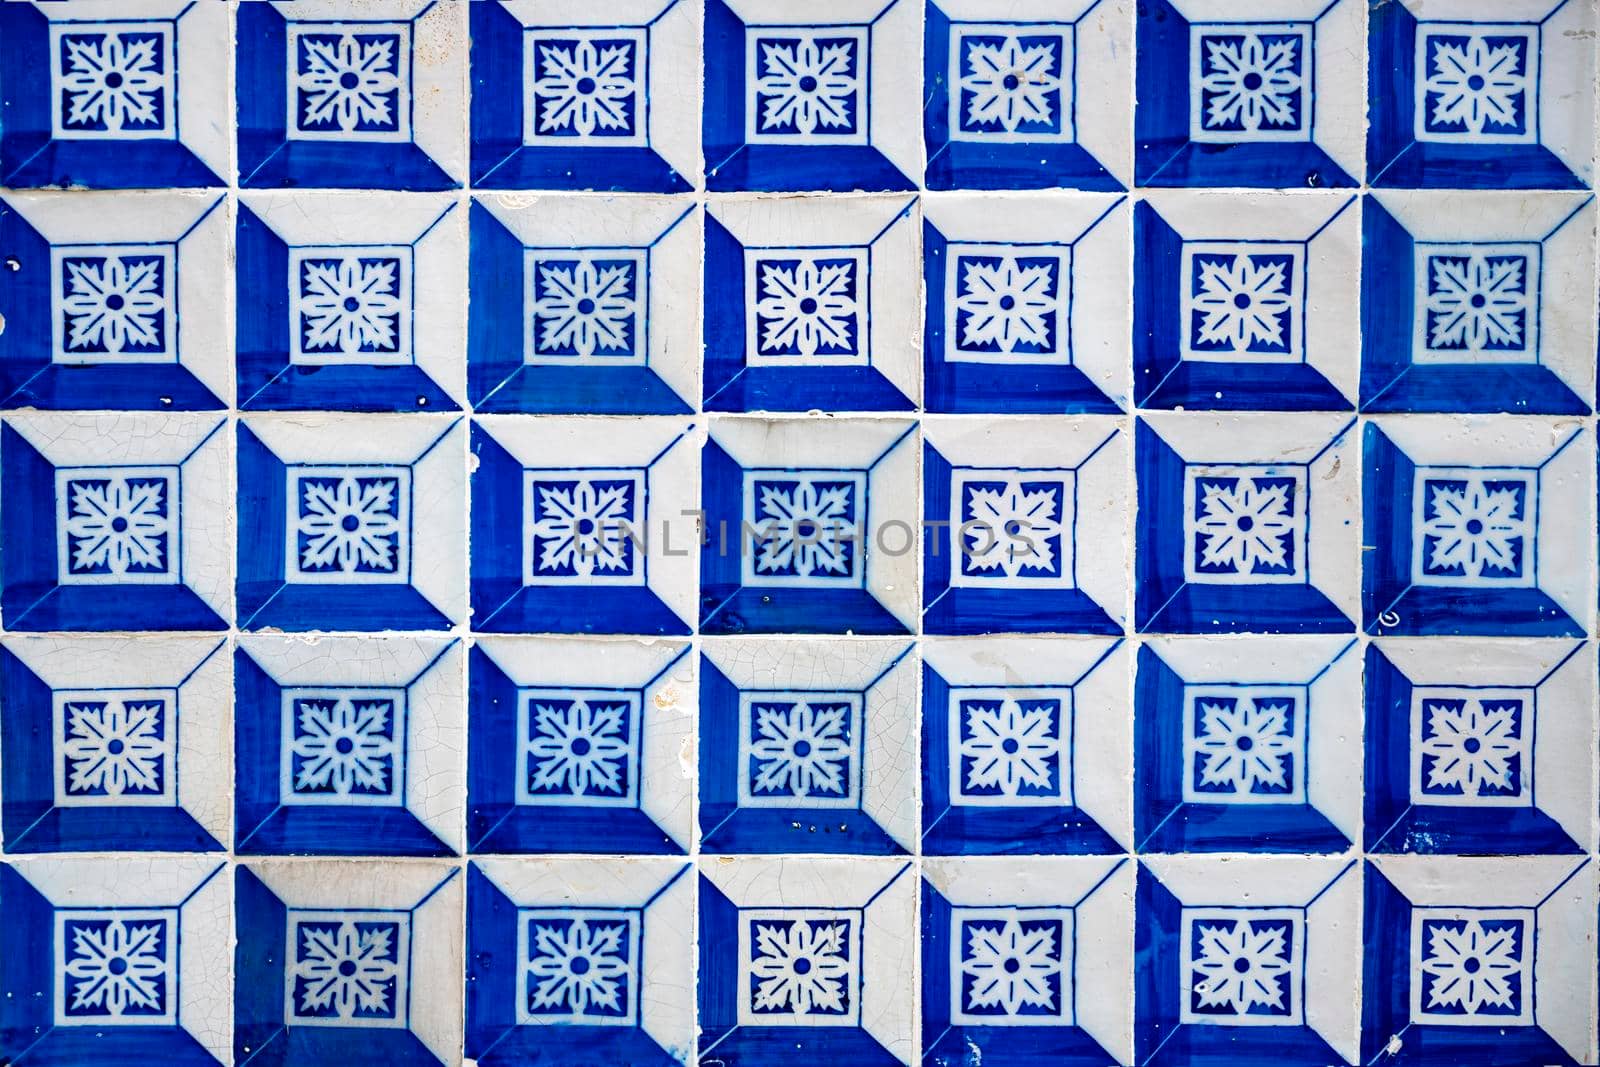 Traditional ornate decorative tiles azulejos